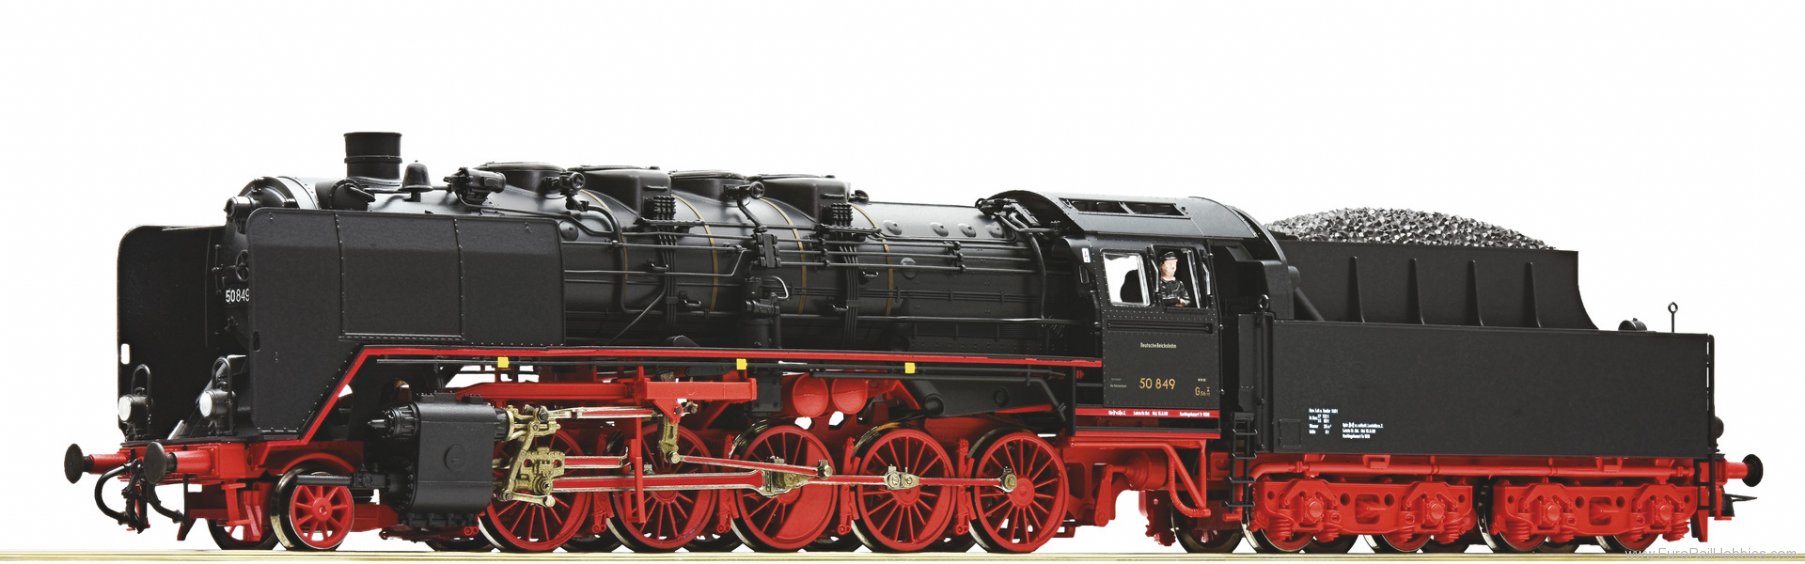 Roco 7100011 Steam locomotive 50 849, DR (DC Analog)